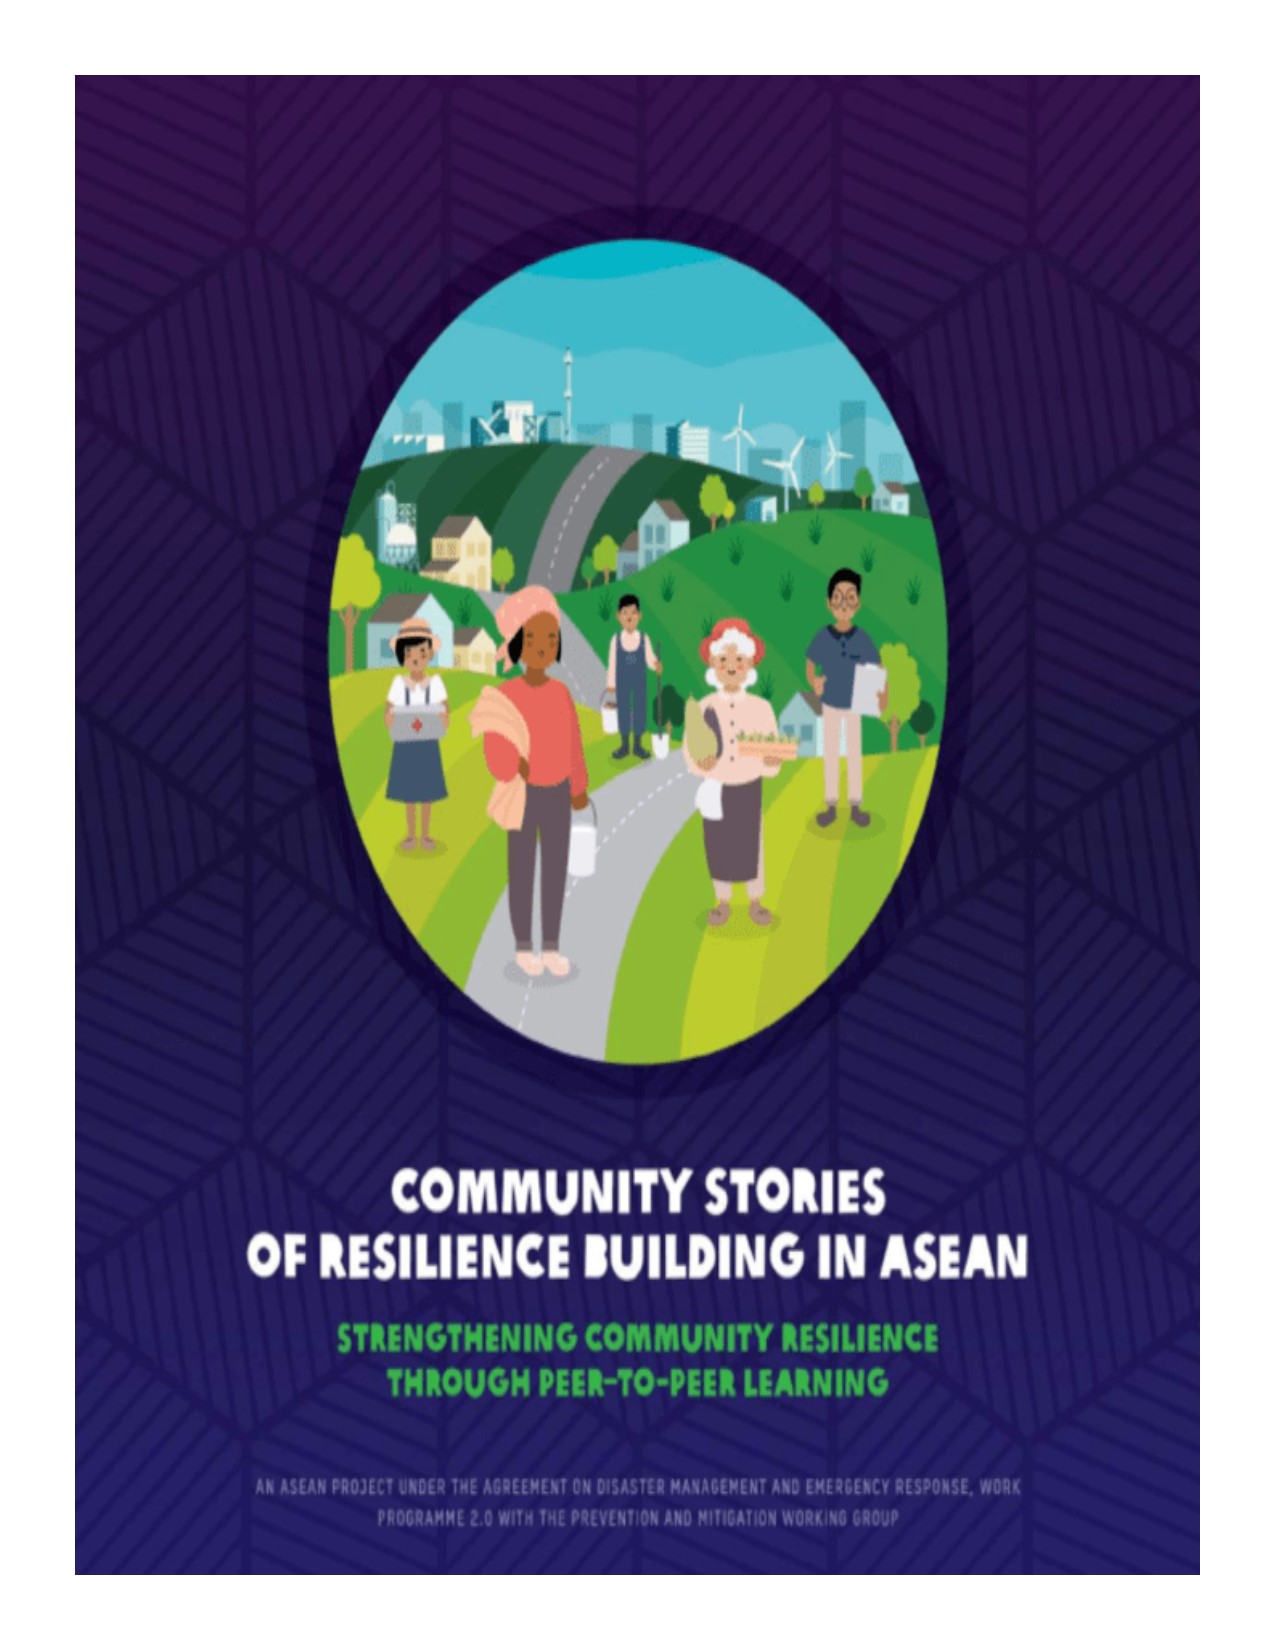 Community stories of resilience building in ASEAN strengthening community resilience through peer-to-peer learning.